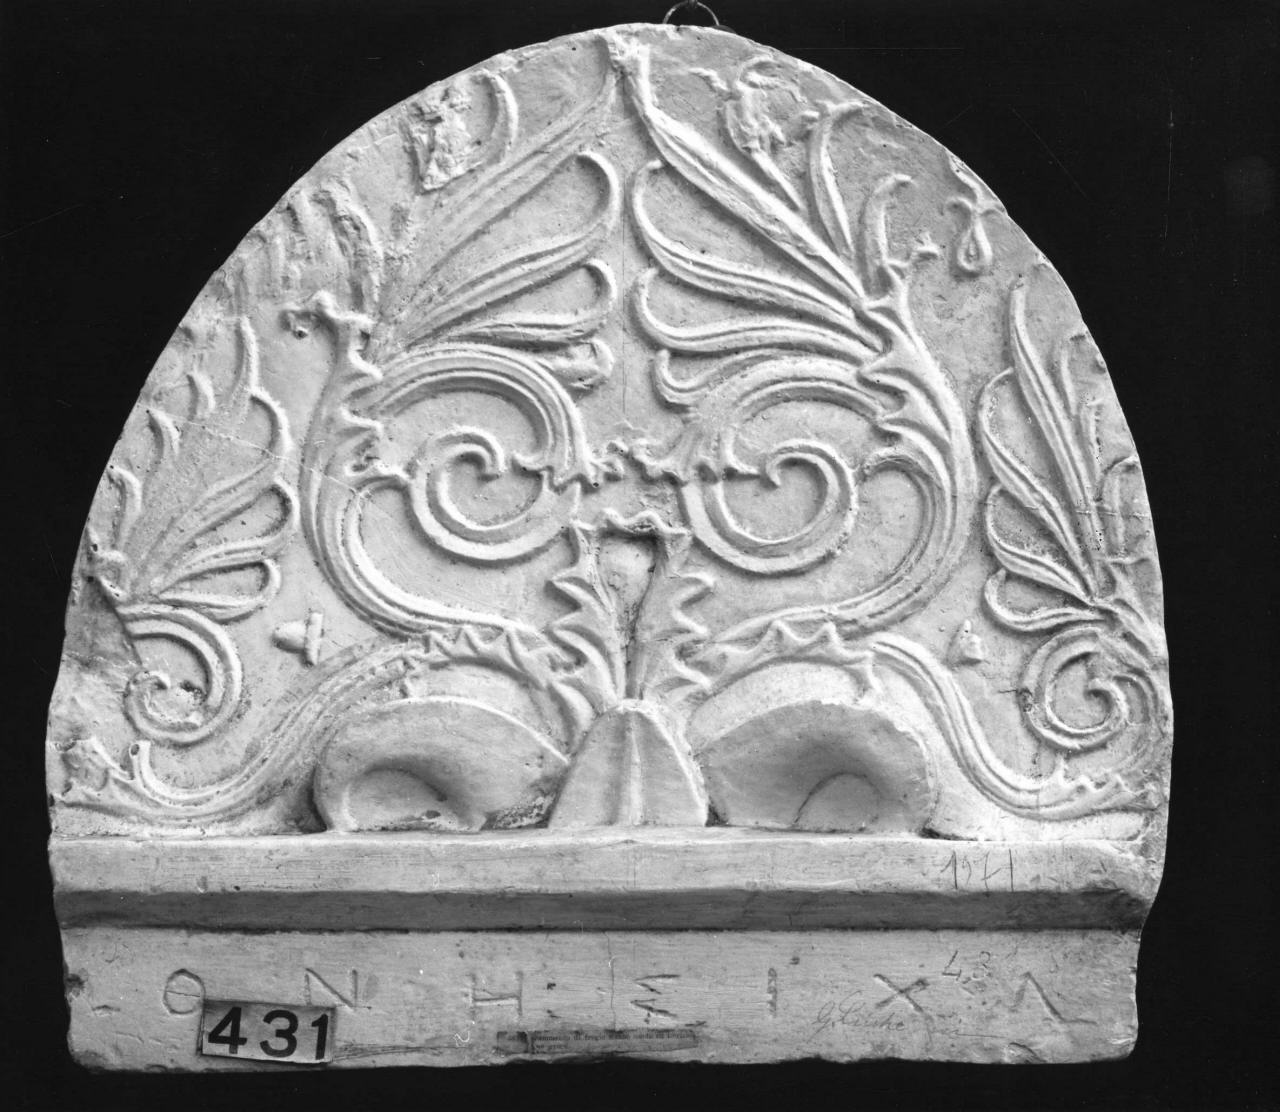 motivi decorativi vegetali (stele funeraria, elemento d'insieme) - produzione italiana (sec. XX)